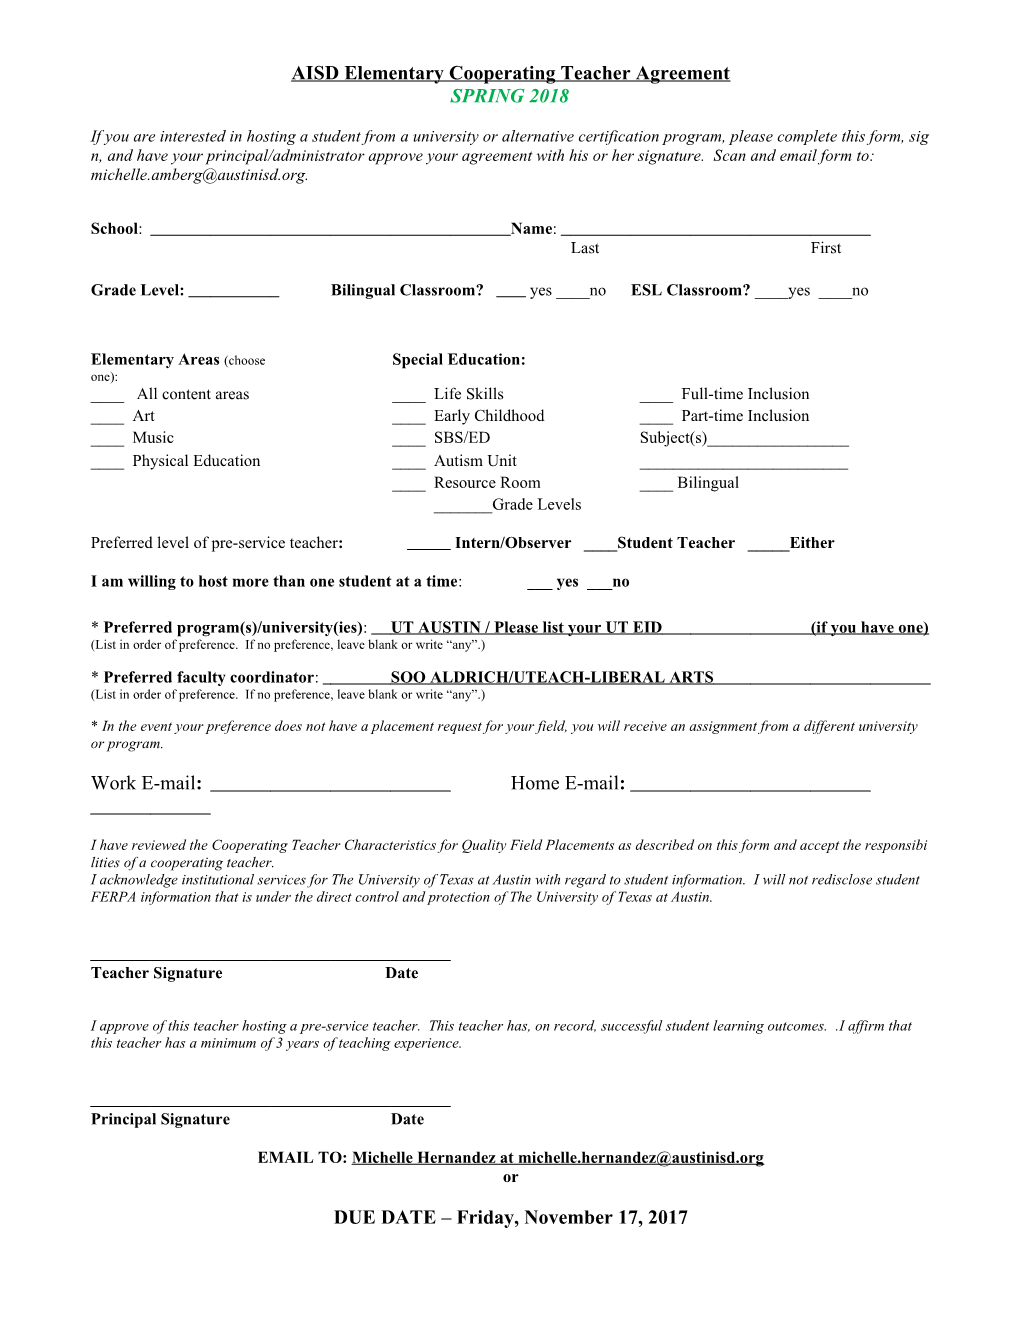 Austin Elementary Cooperating Teacher Application/Agreement